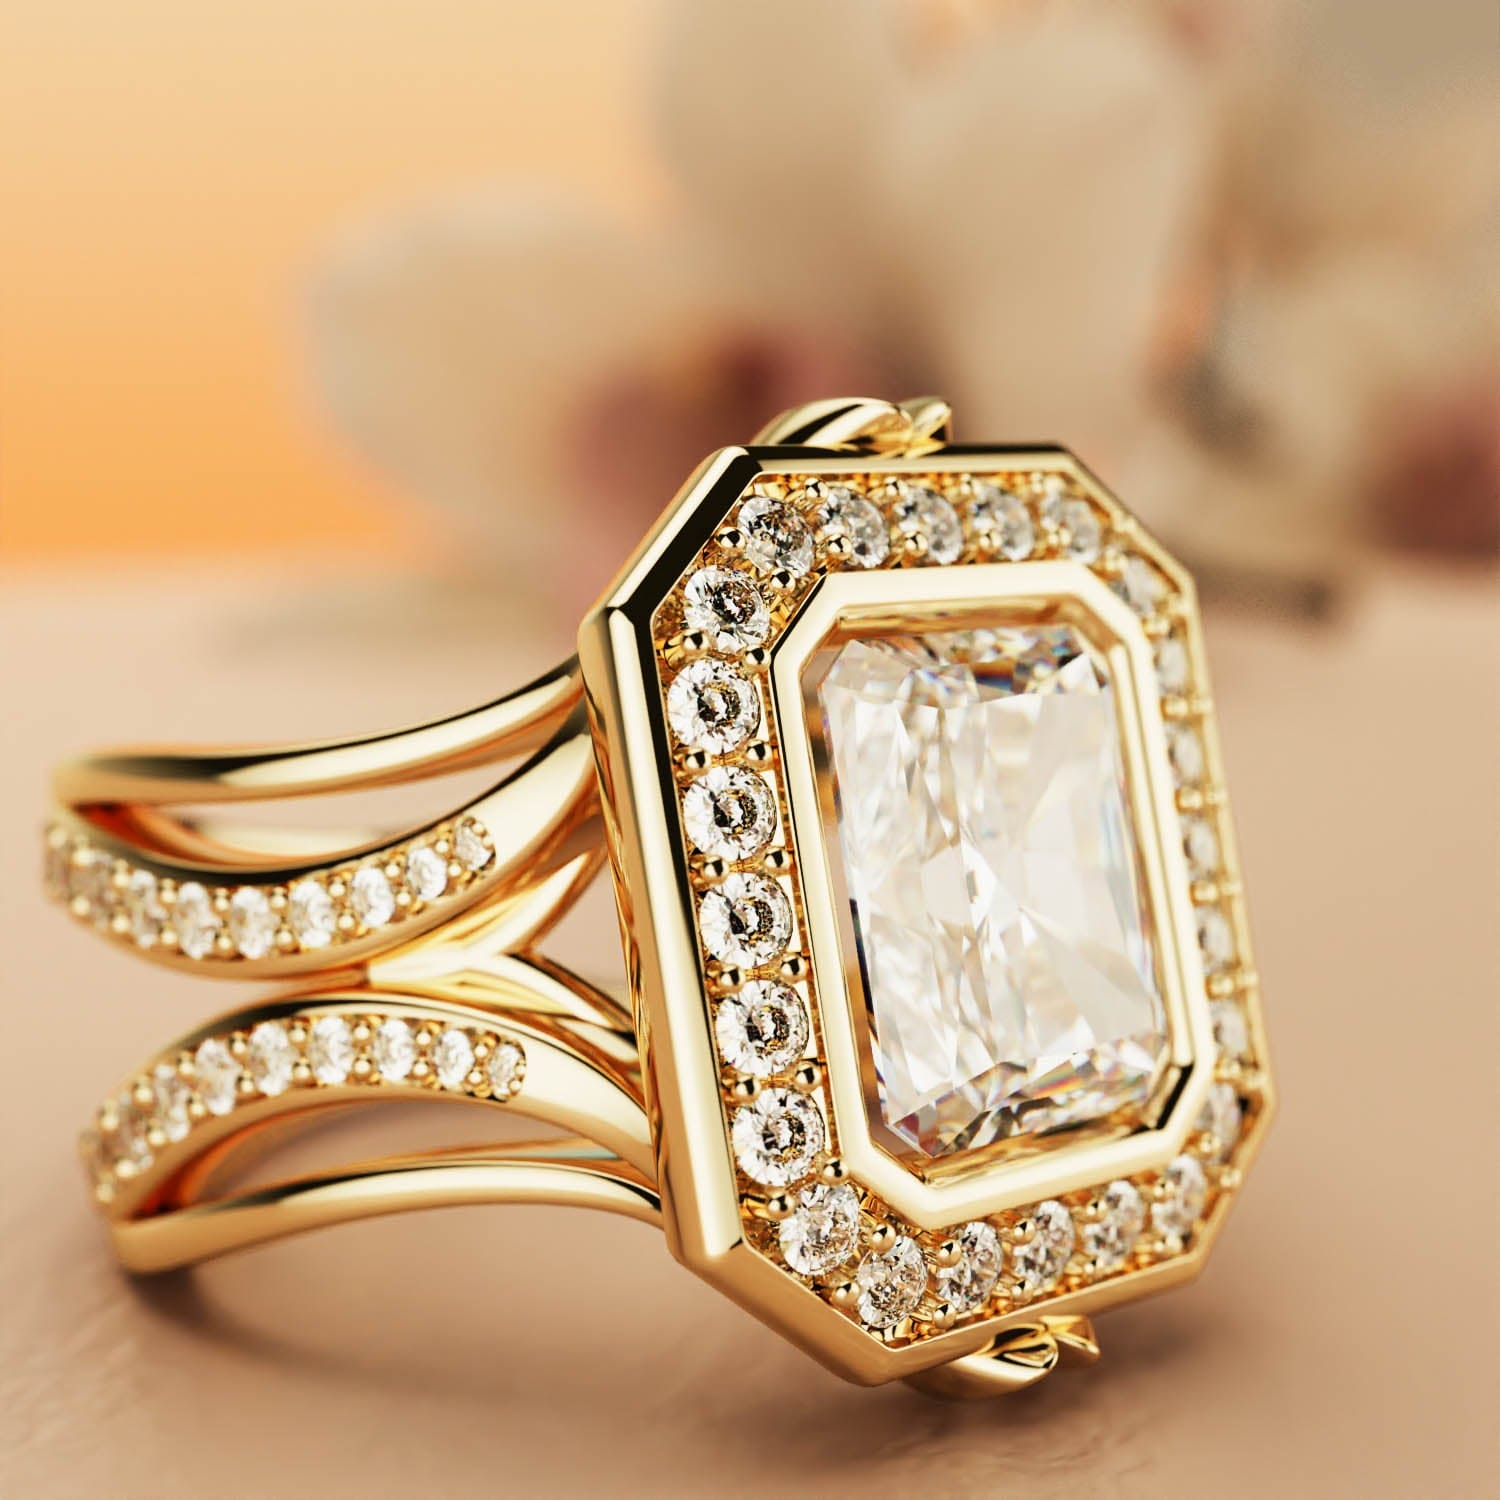 Elysian Glow: Emerald-Cut Diamond Ring - 18K Gold Vermeil